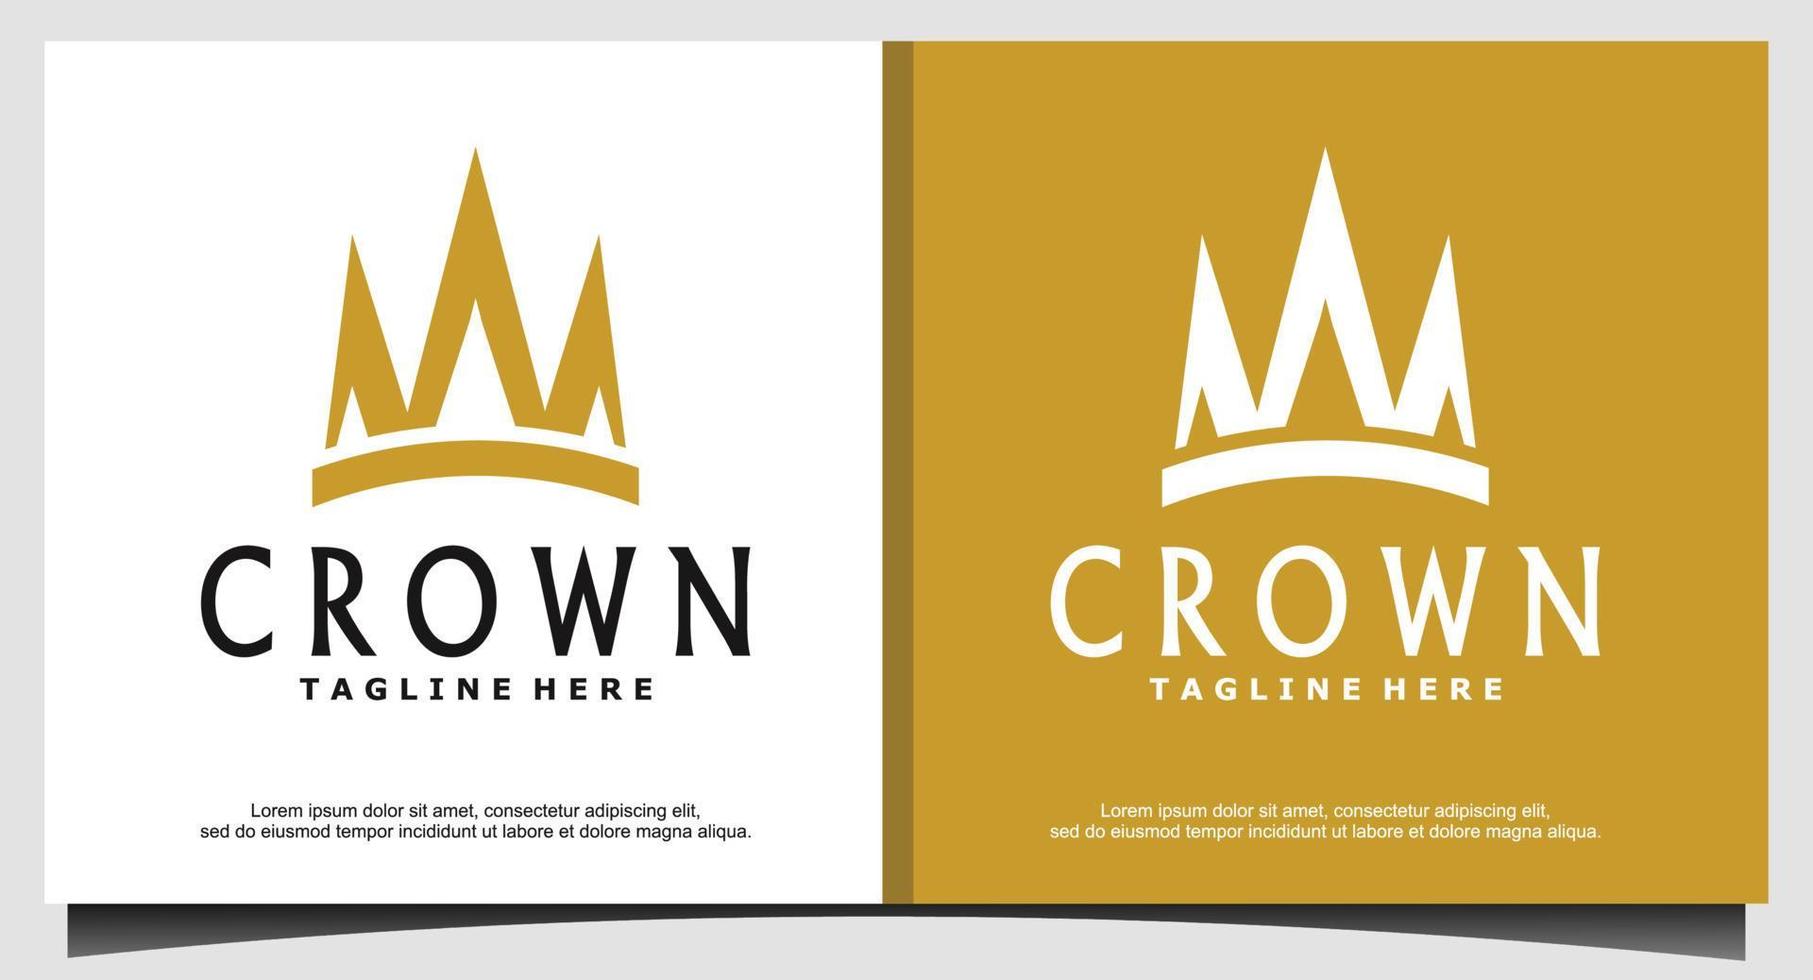 Queen King Princess Crown Royal beauty luxury logo design vector